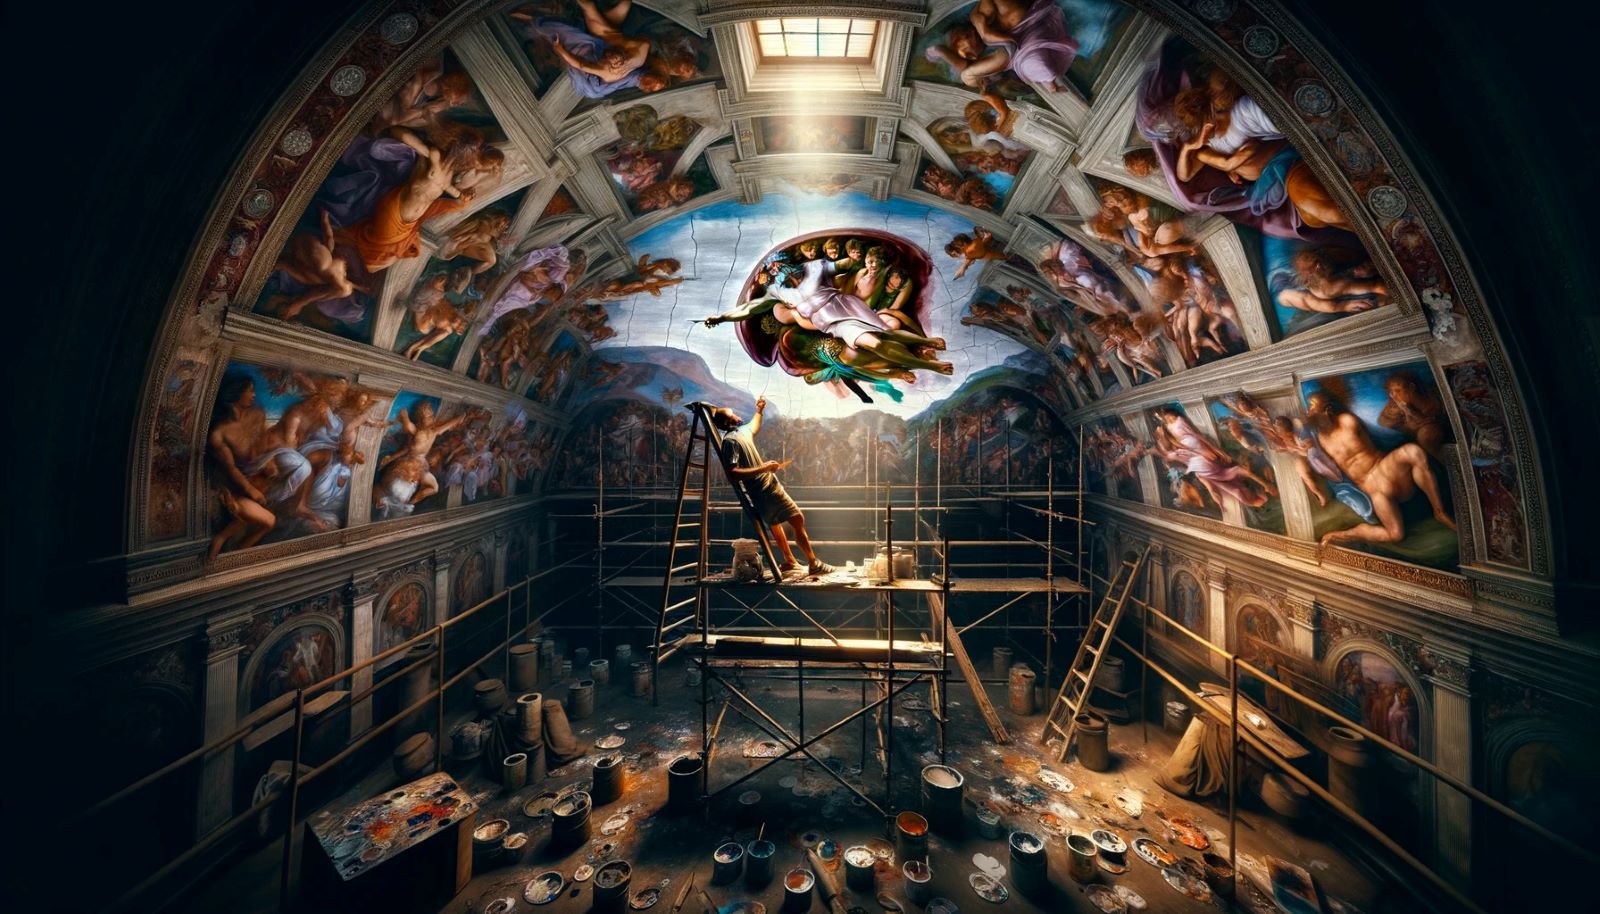 When Did Michelangelo Paint Sistine Chapel